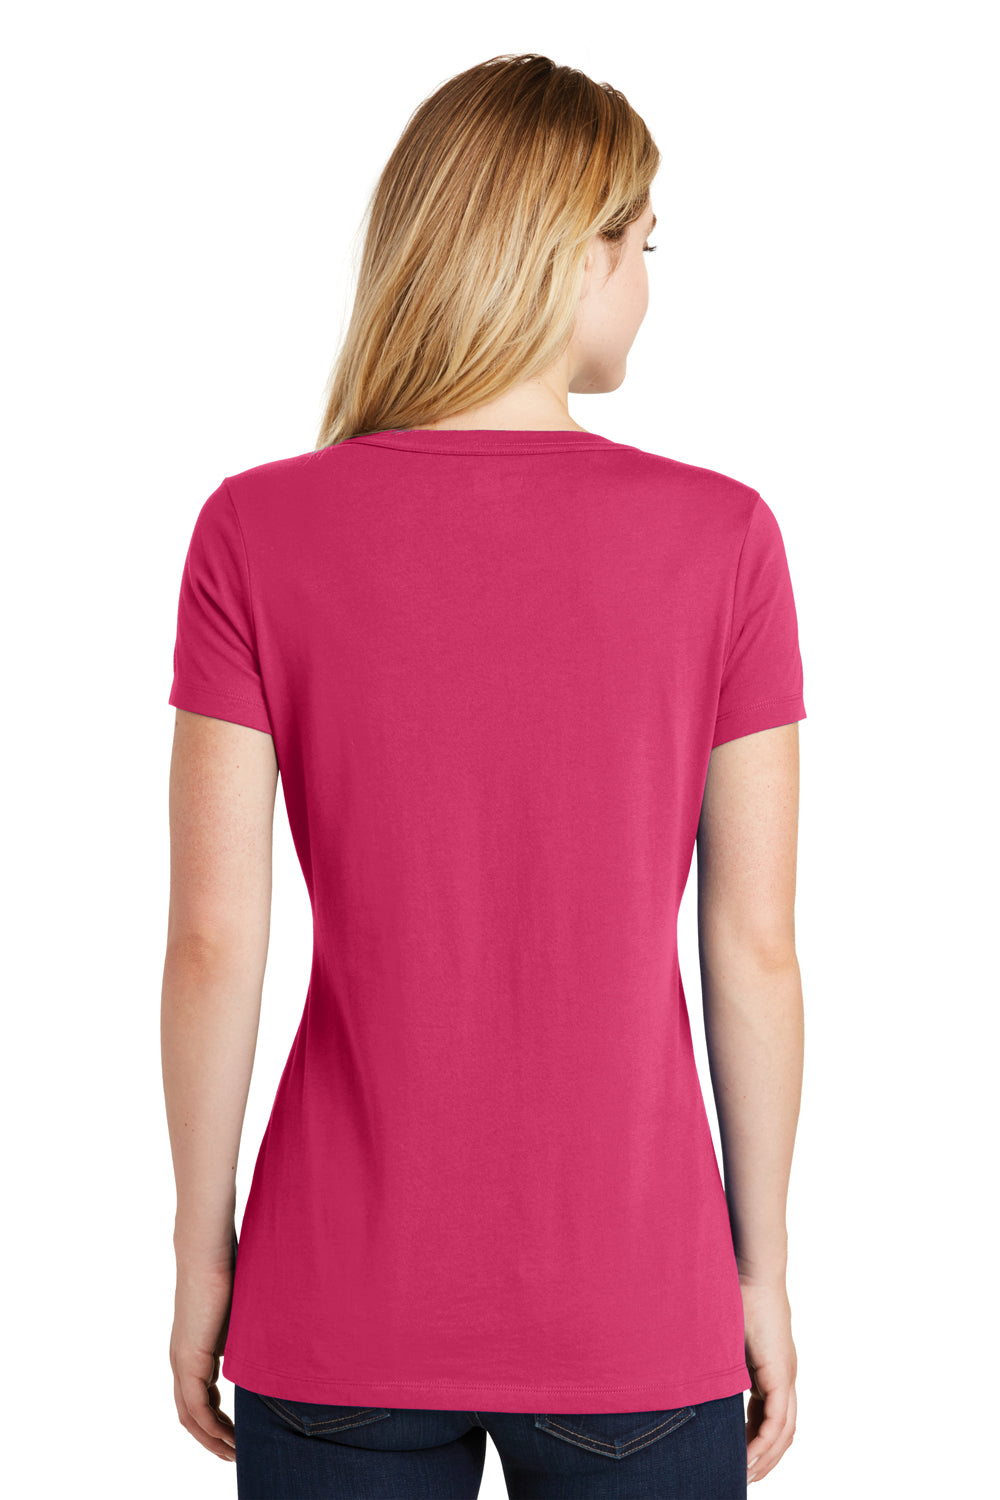 New Era LNEA101 Womens Heritage Short Sleeve V-Neck T-Shirt Deep Pink Back